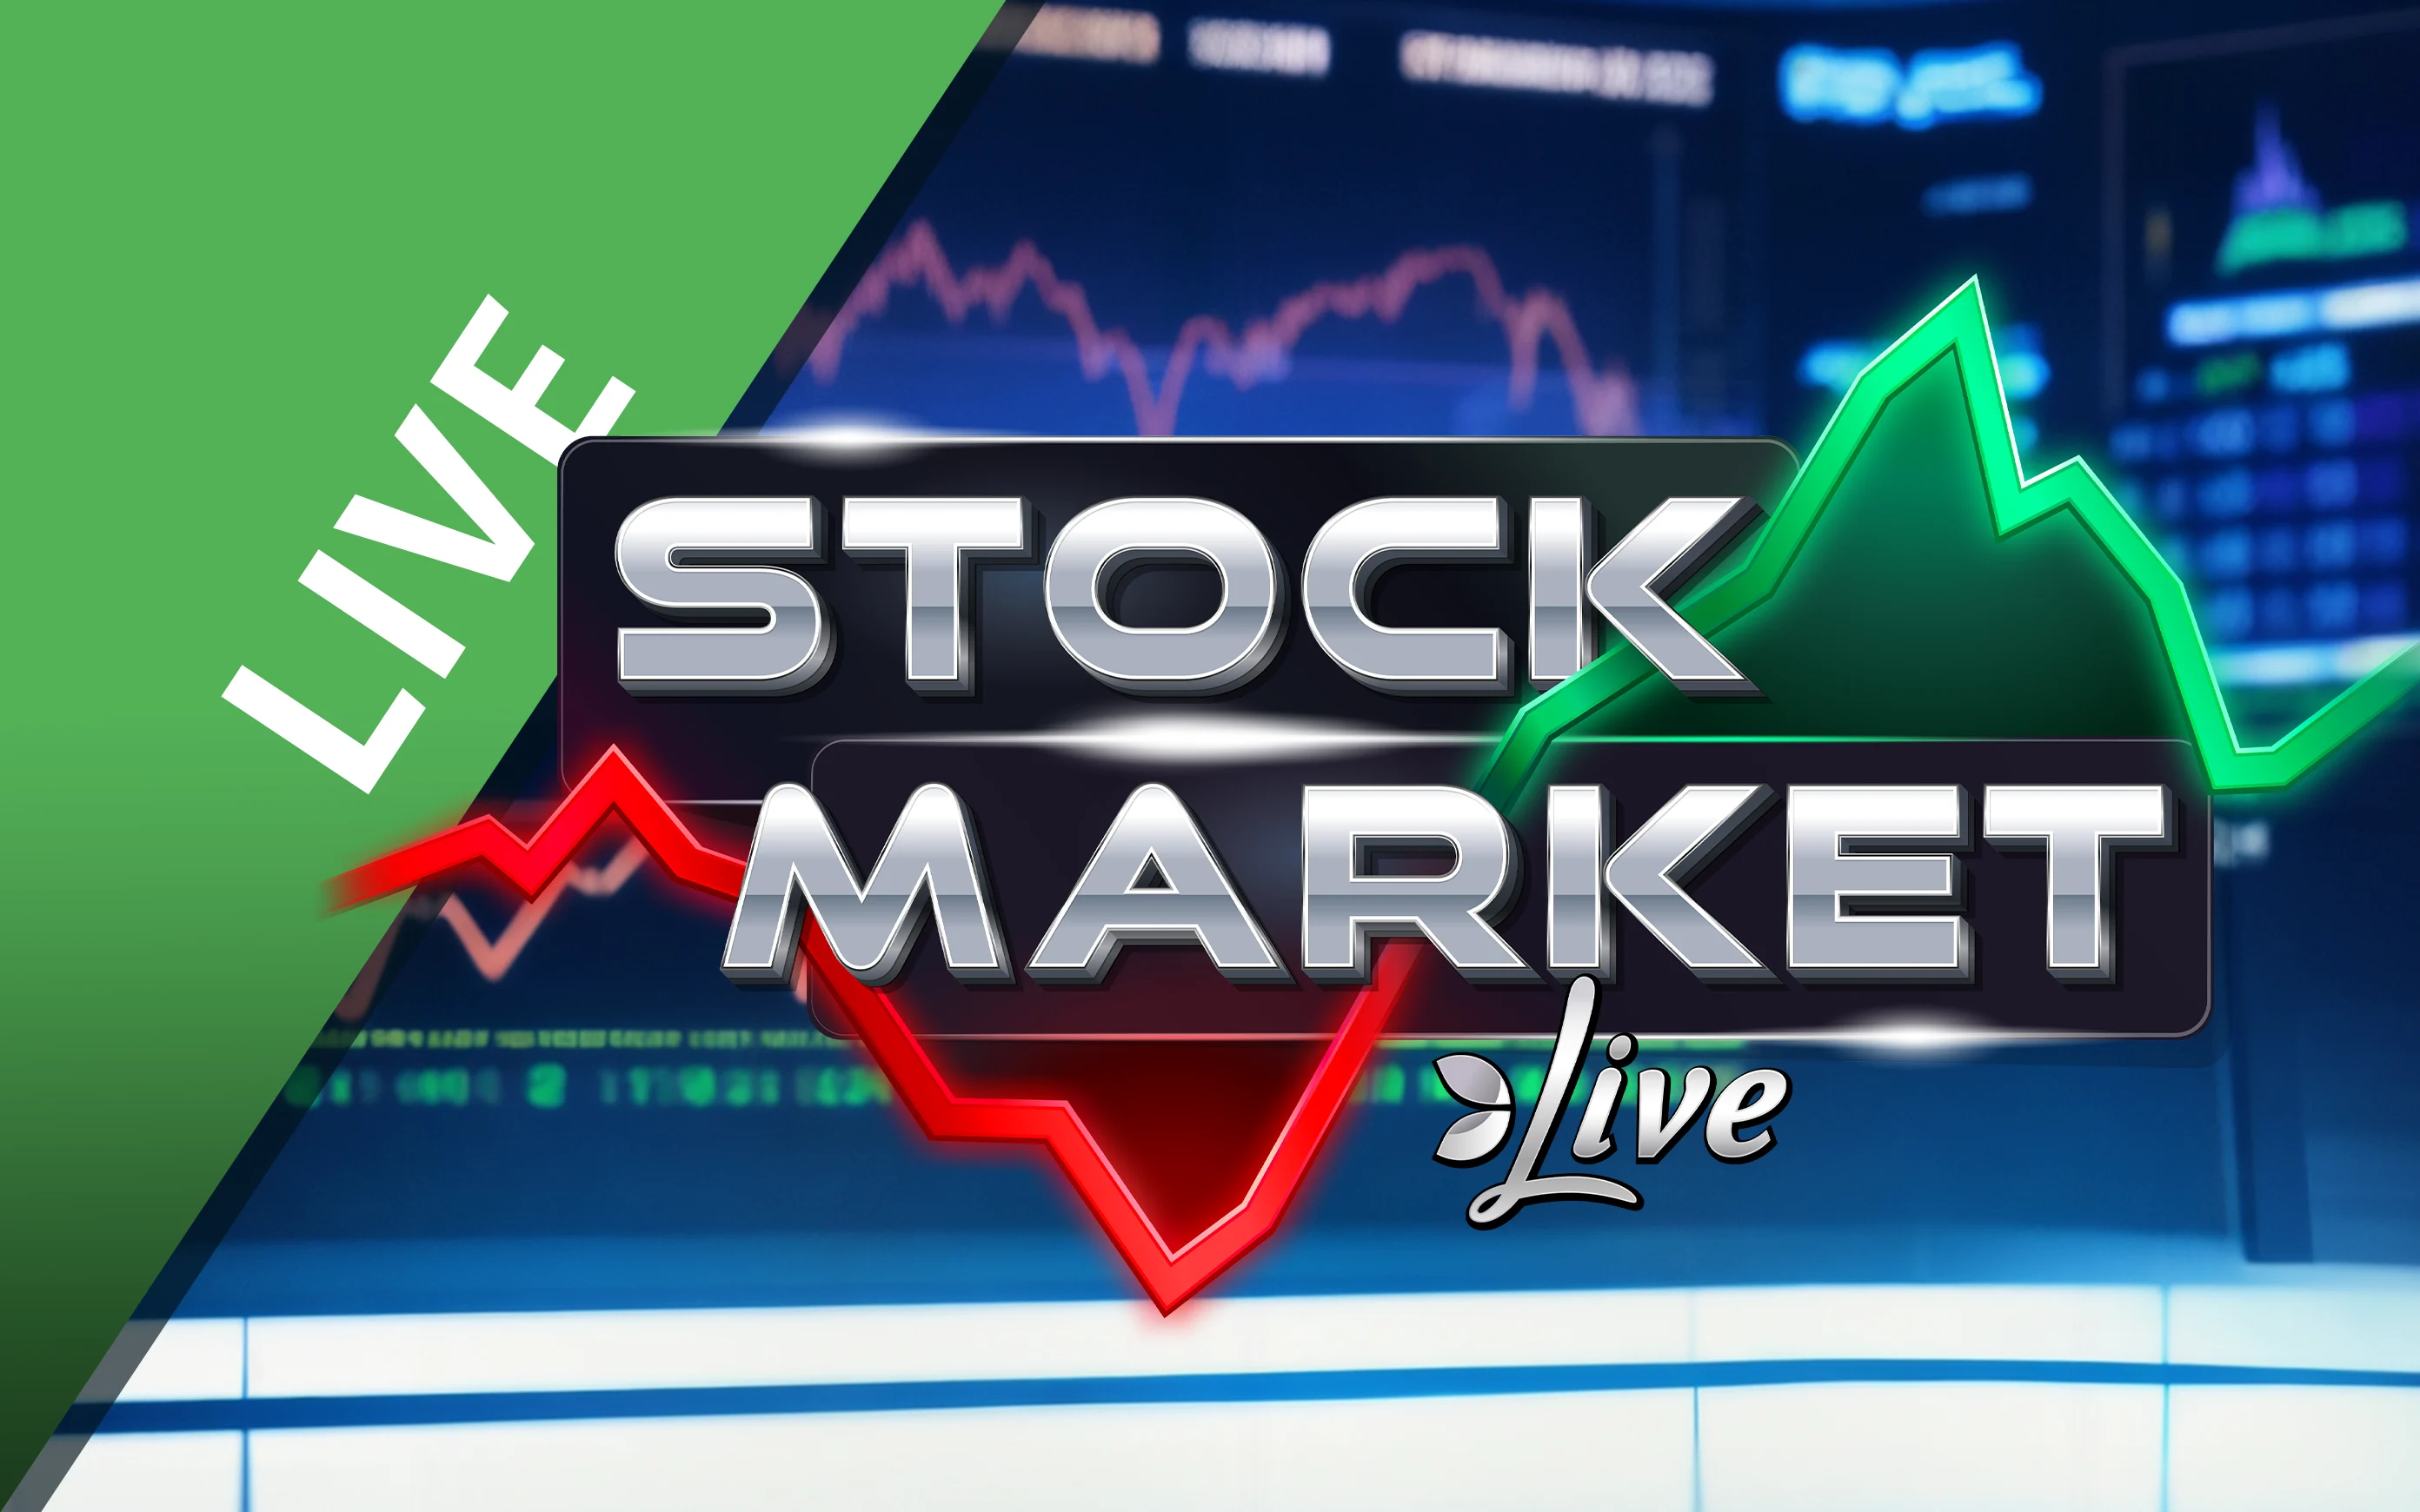 Play Stock Market on Starcasino.be online casino